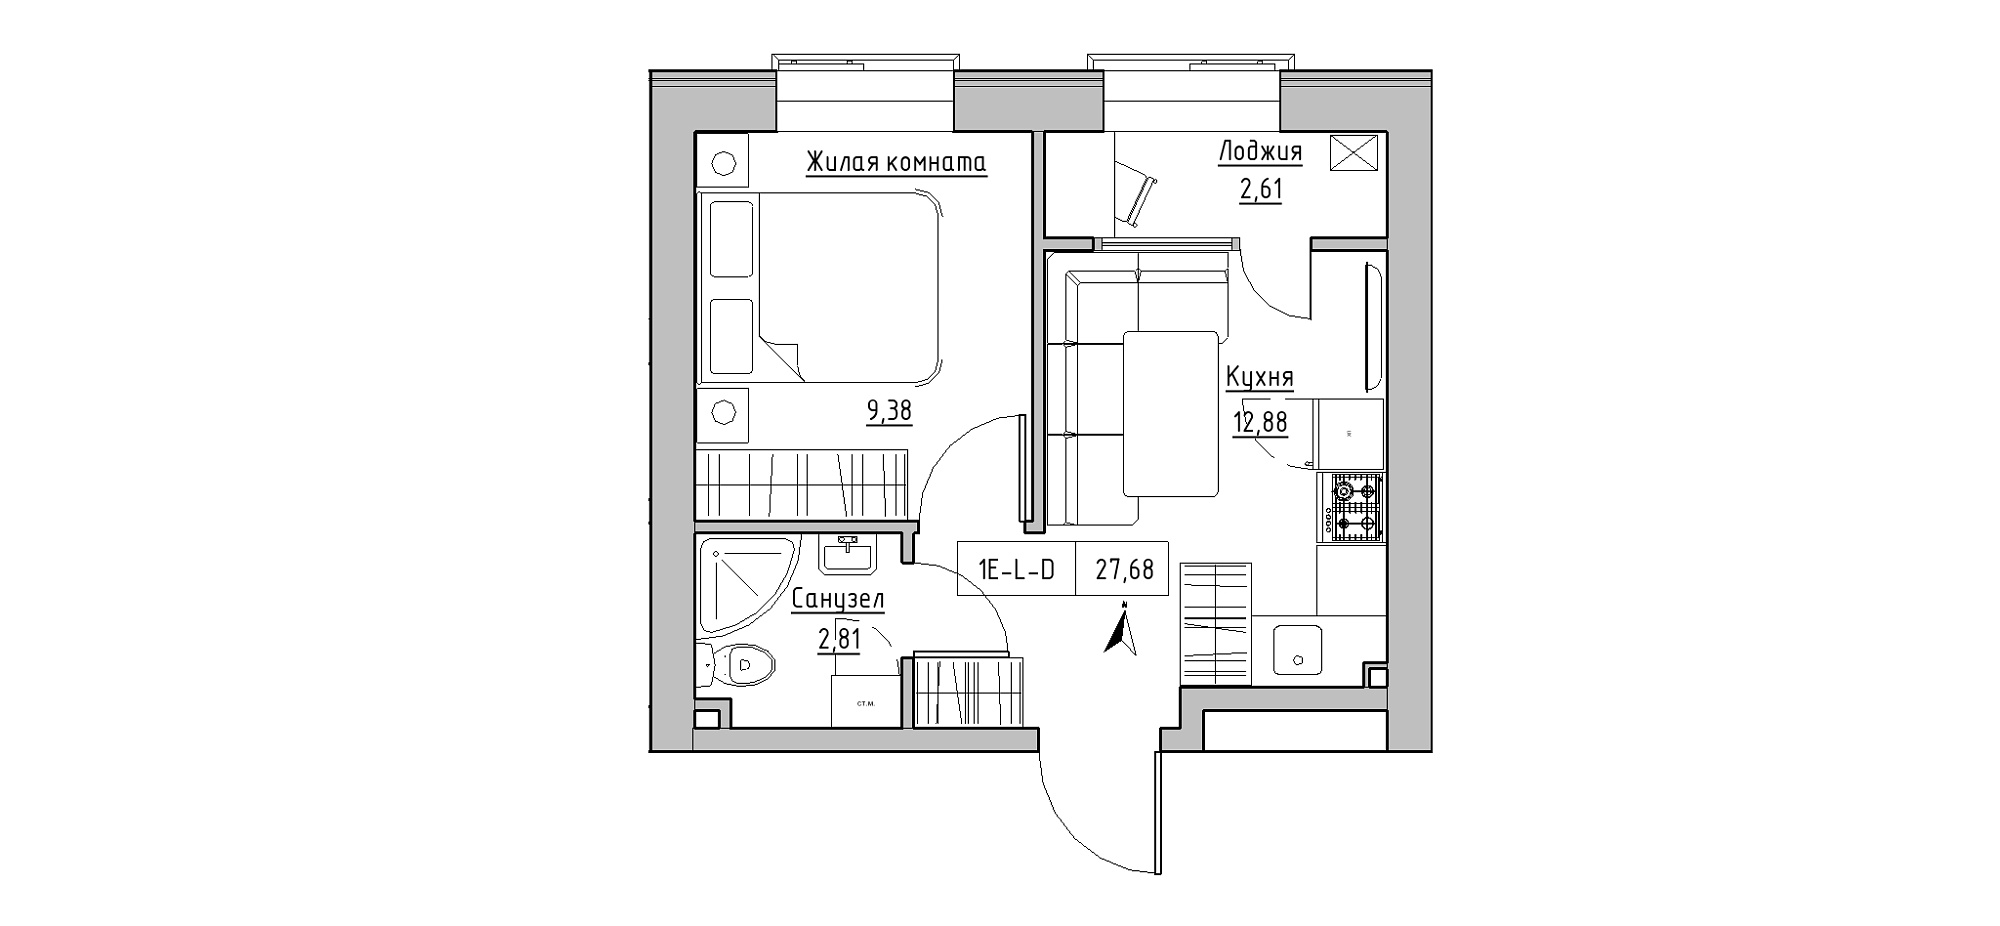 Planning 1-rm flats area 27.68m2, KS-020-02/0001.